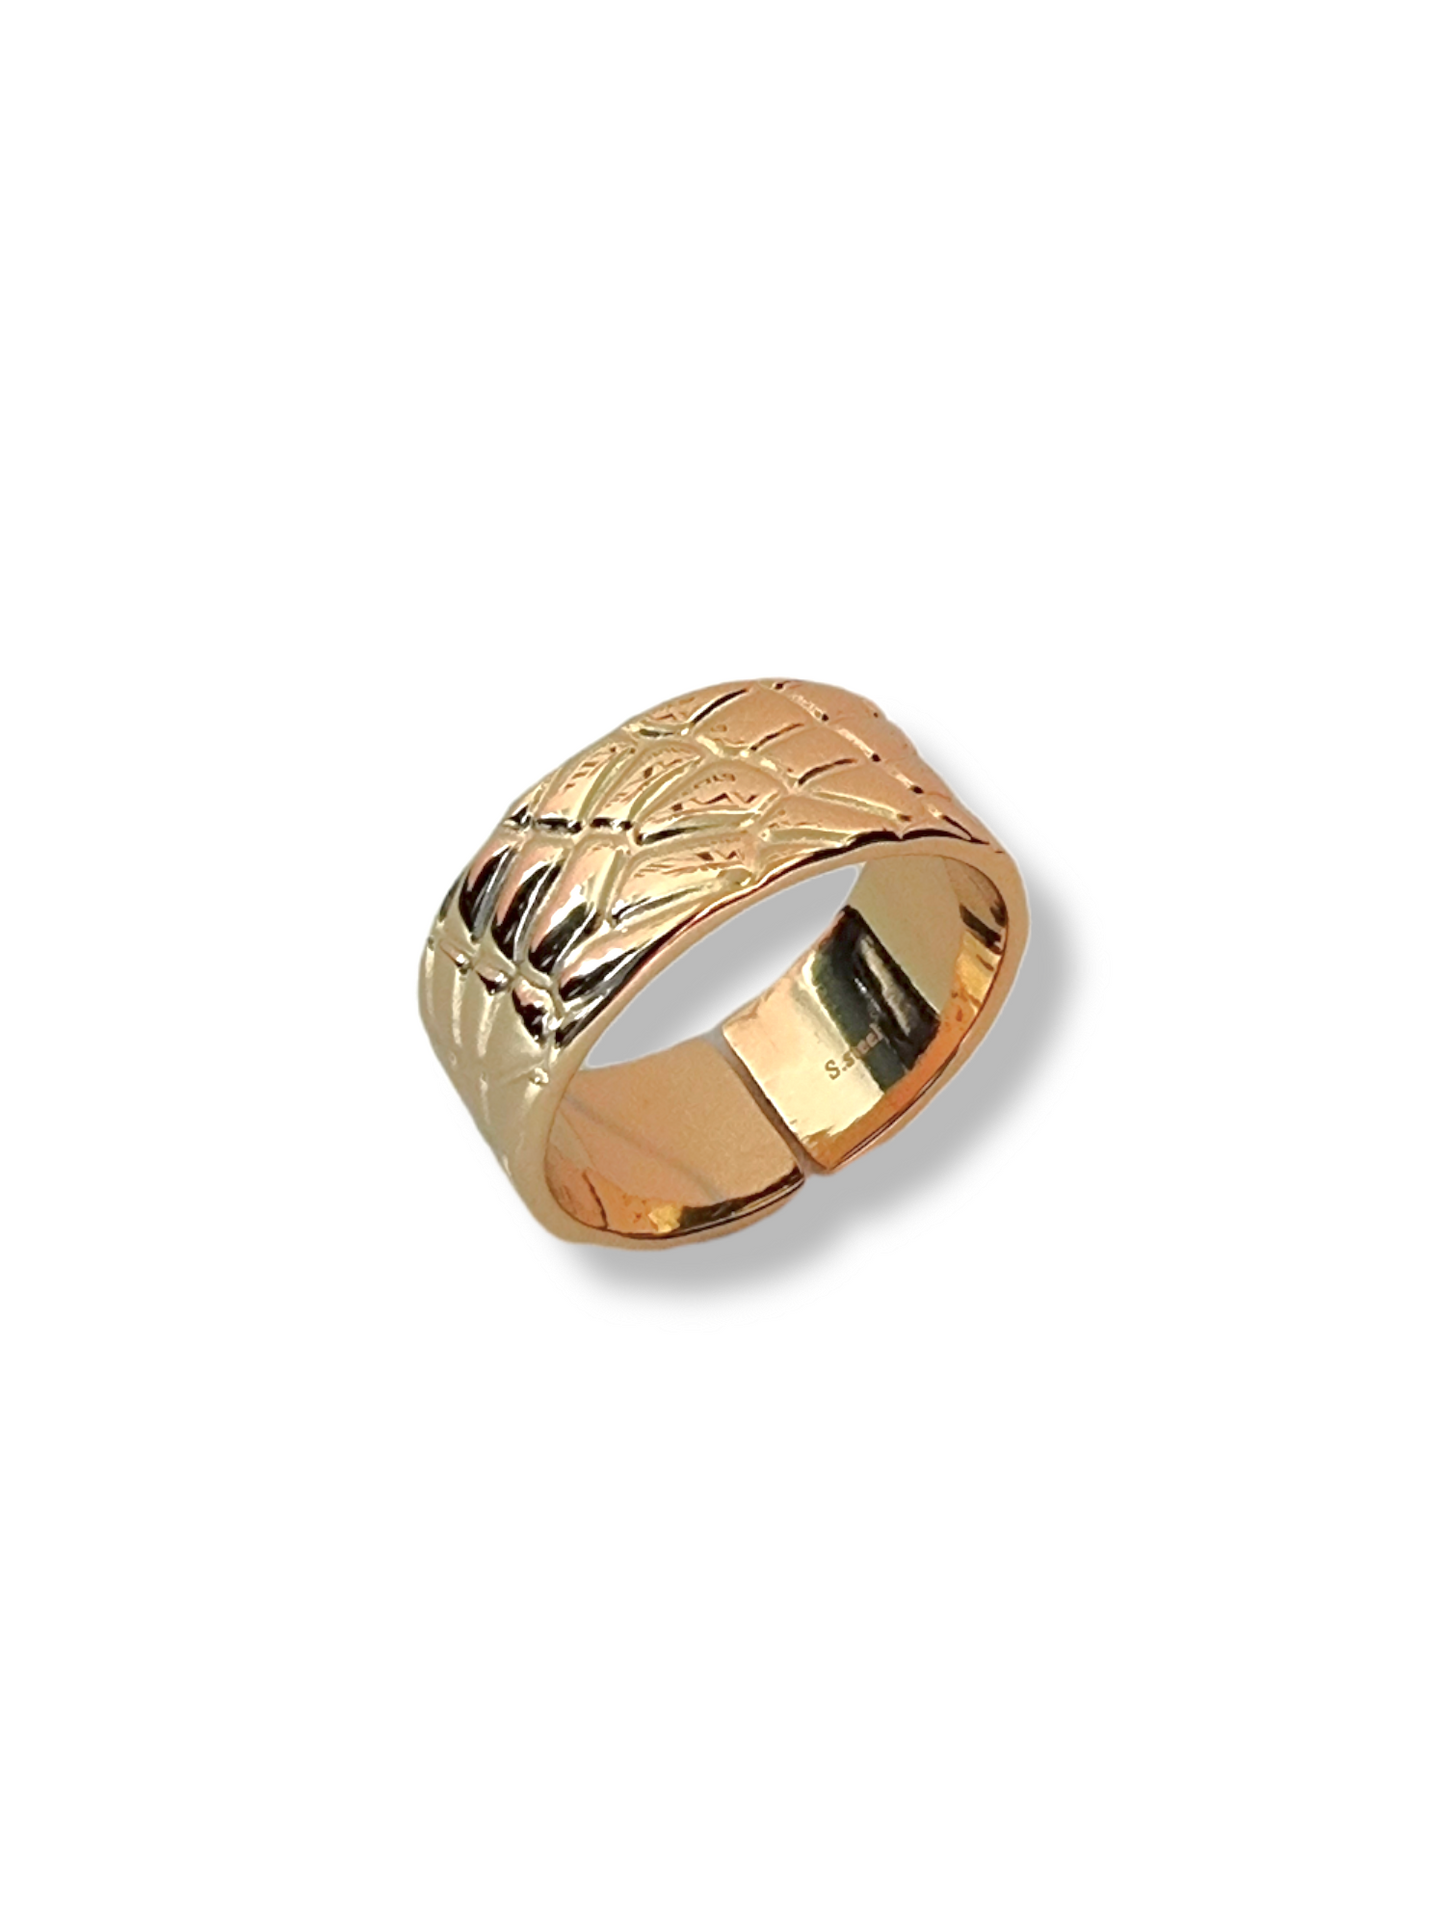 Billi Ring (Gold)